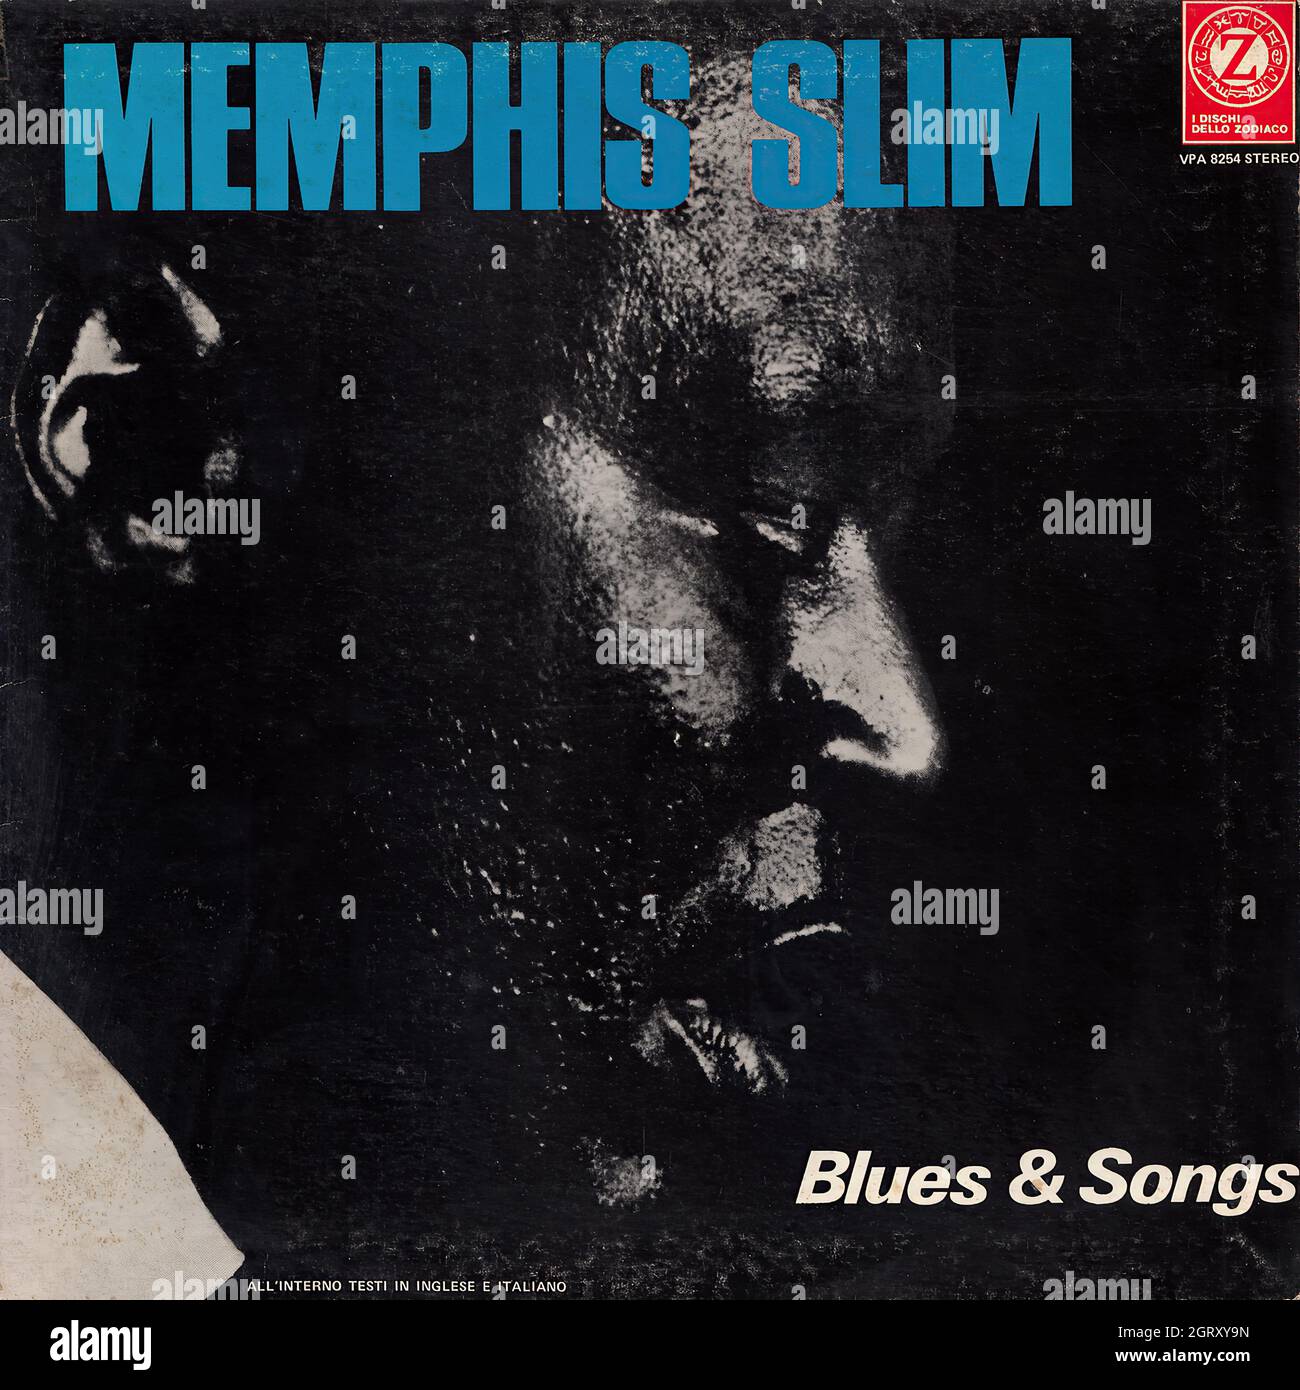 Memphis Slim - Blues & songs - Vintage Vinyl Record Cover Stock Photo